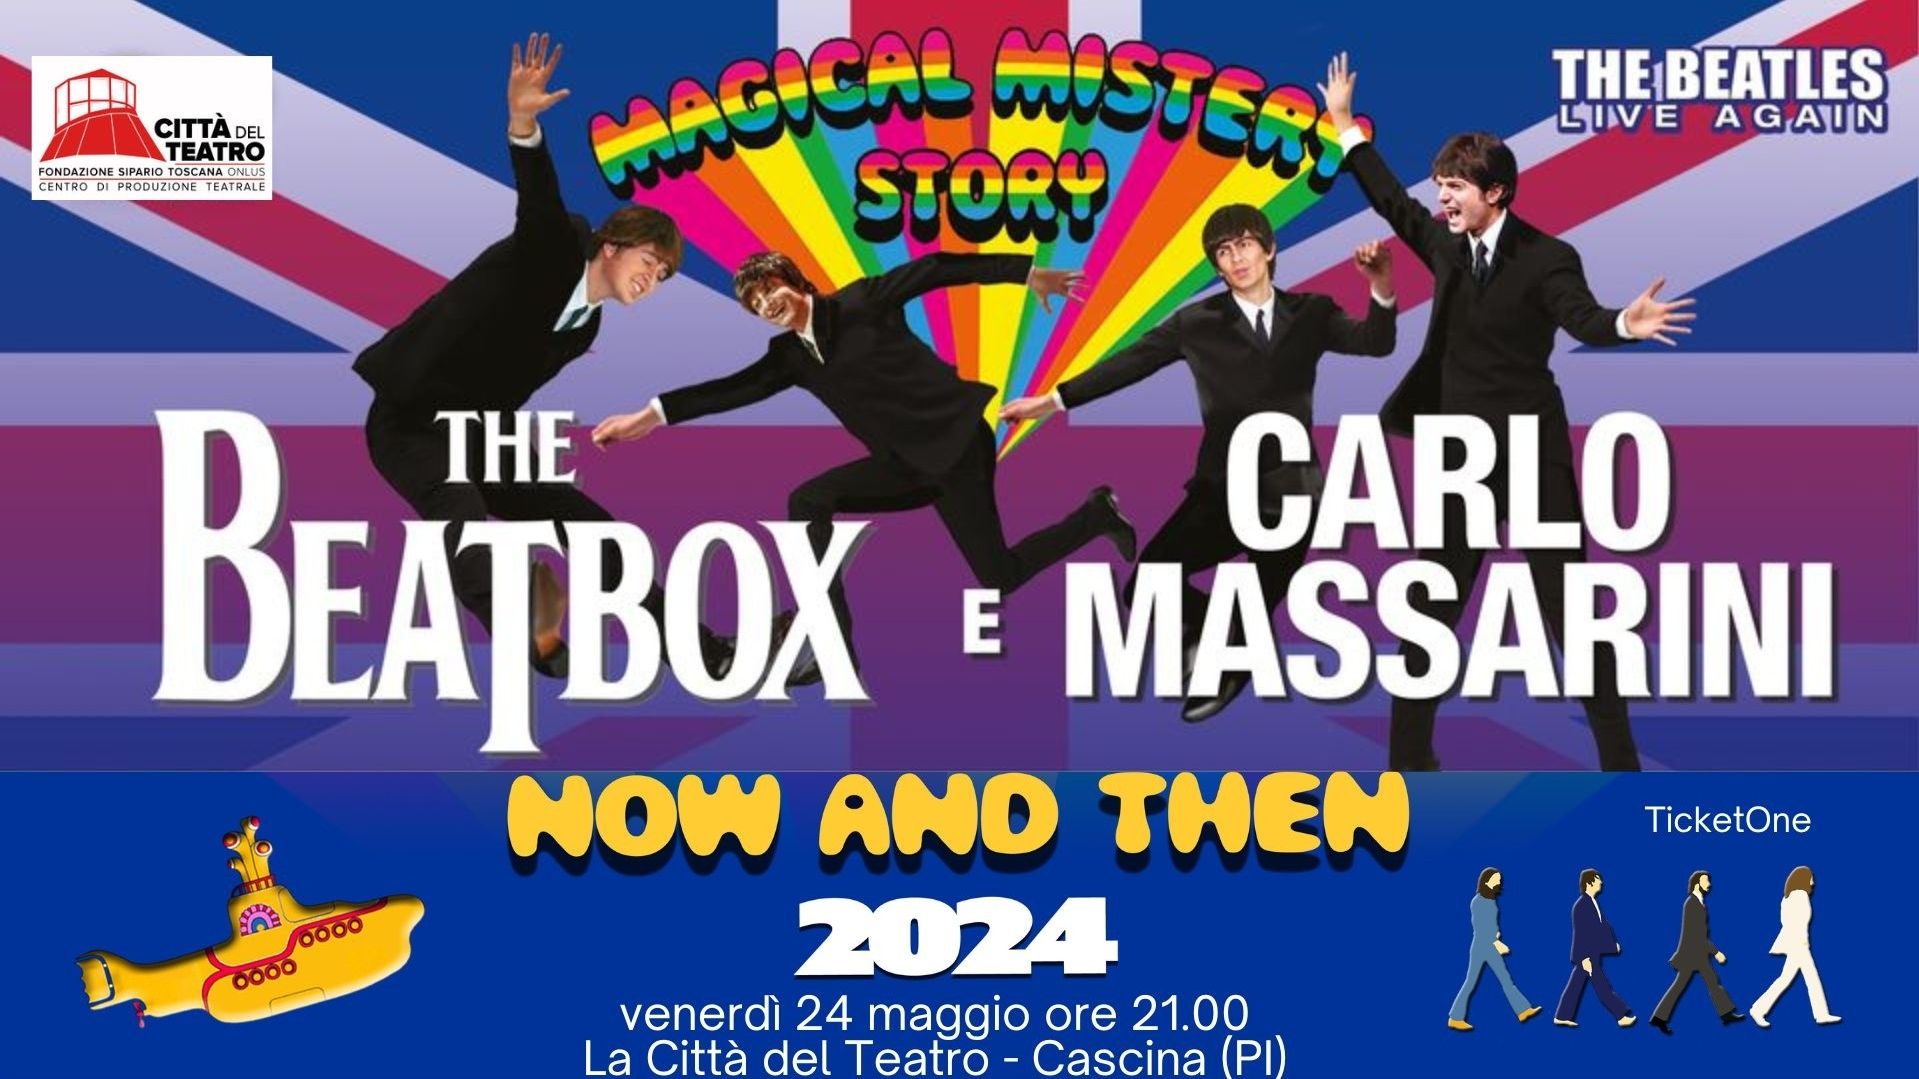 The Beatbox e Carlo Massarini in Magical Mistery Story